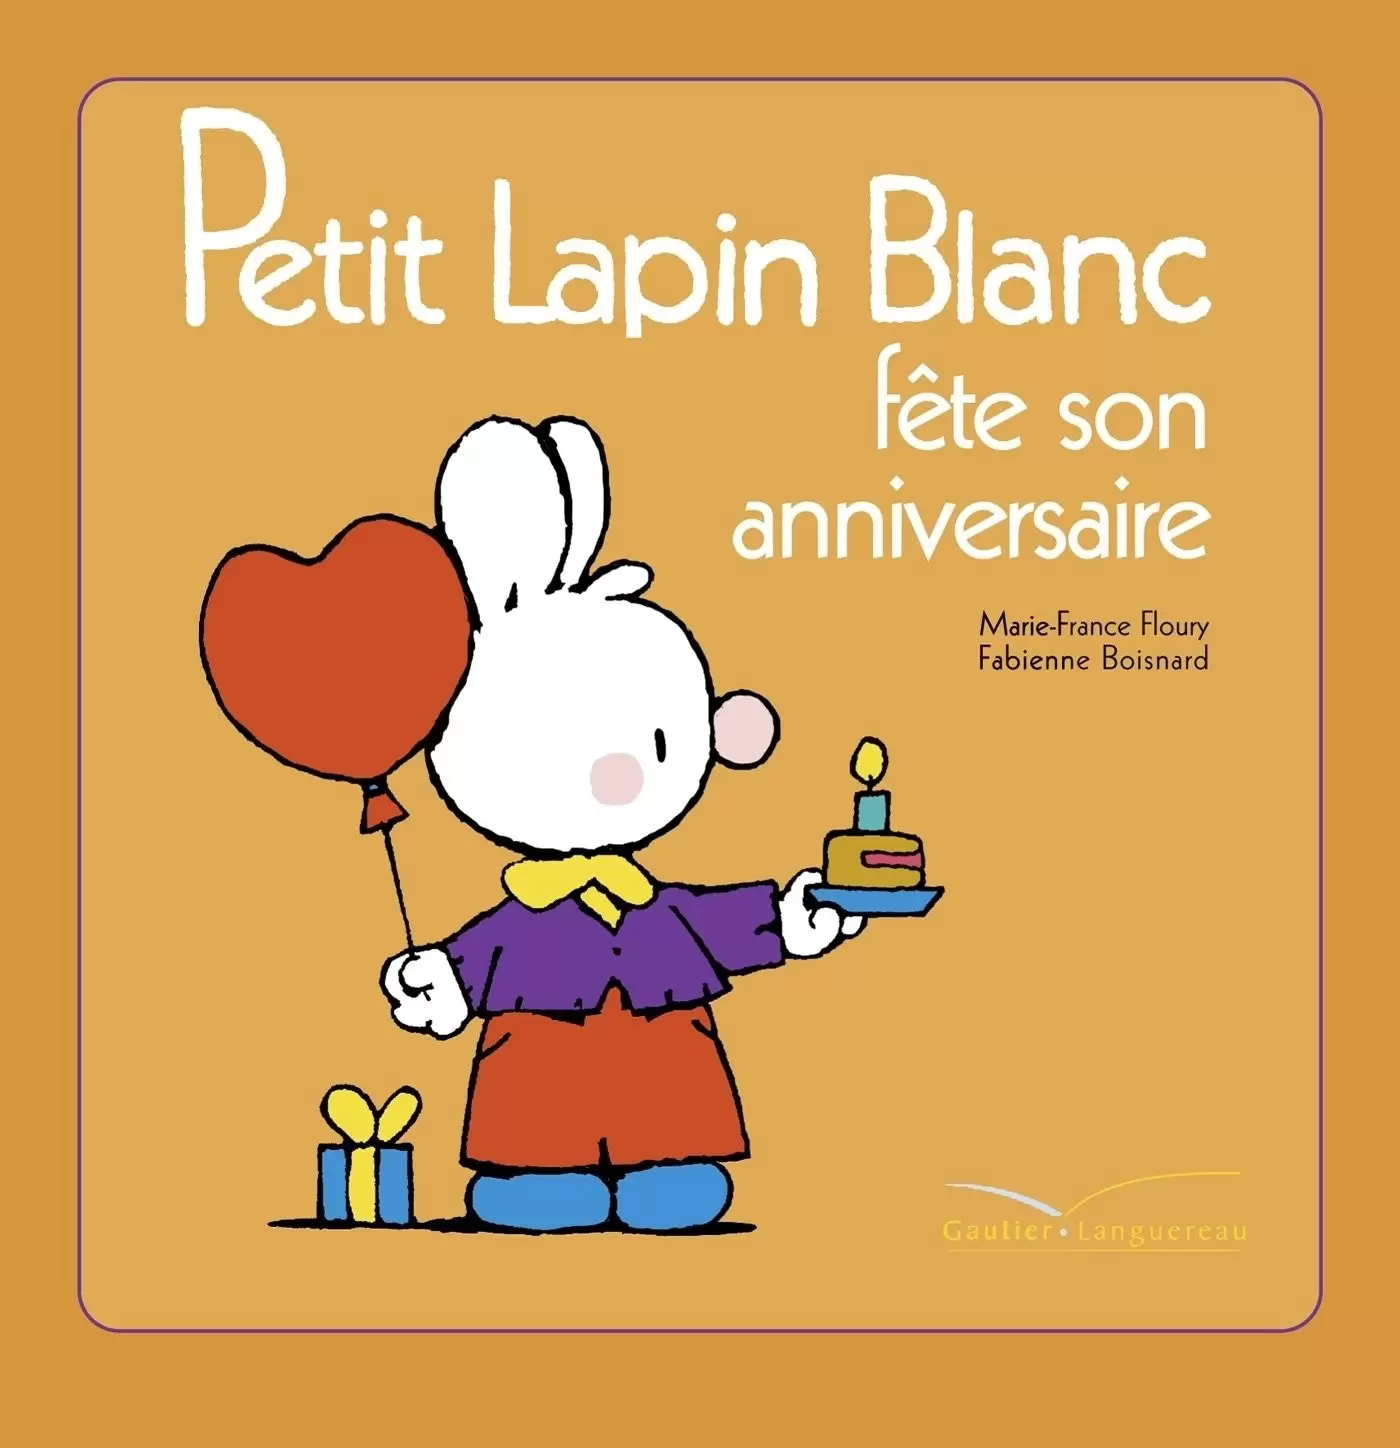 Petit Lapin Blanc - Petit Lapin Blanc fête son anniversaire